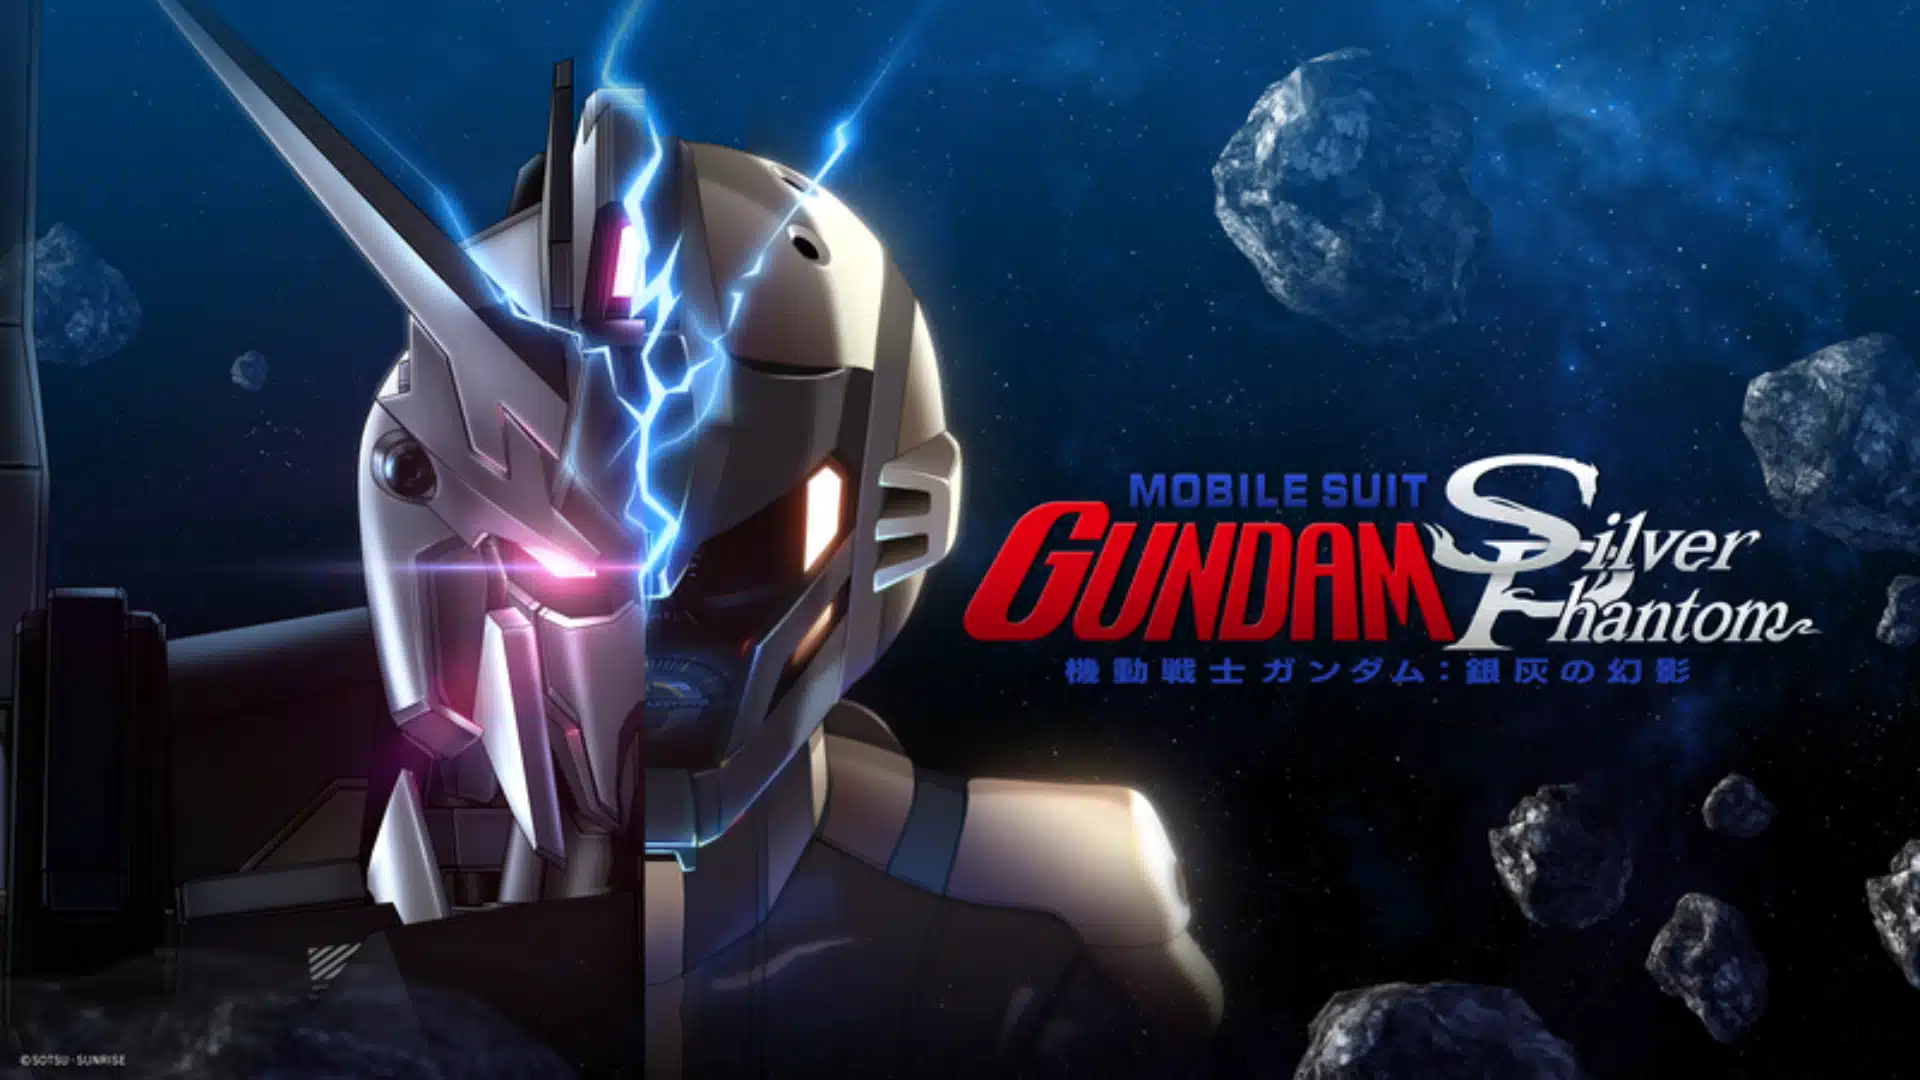 Mobile Suit Gundam Silver Phantom